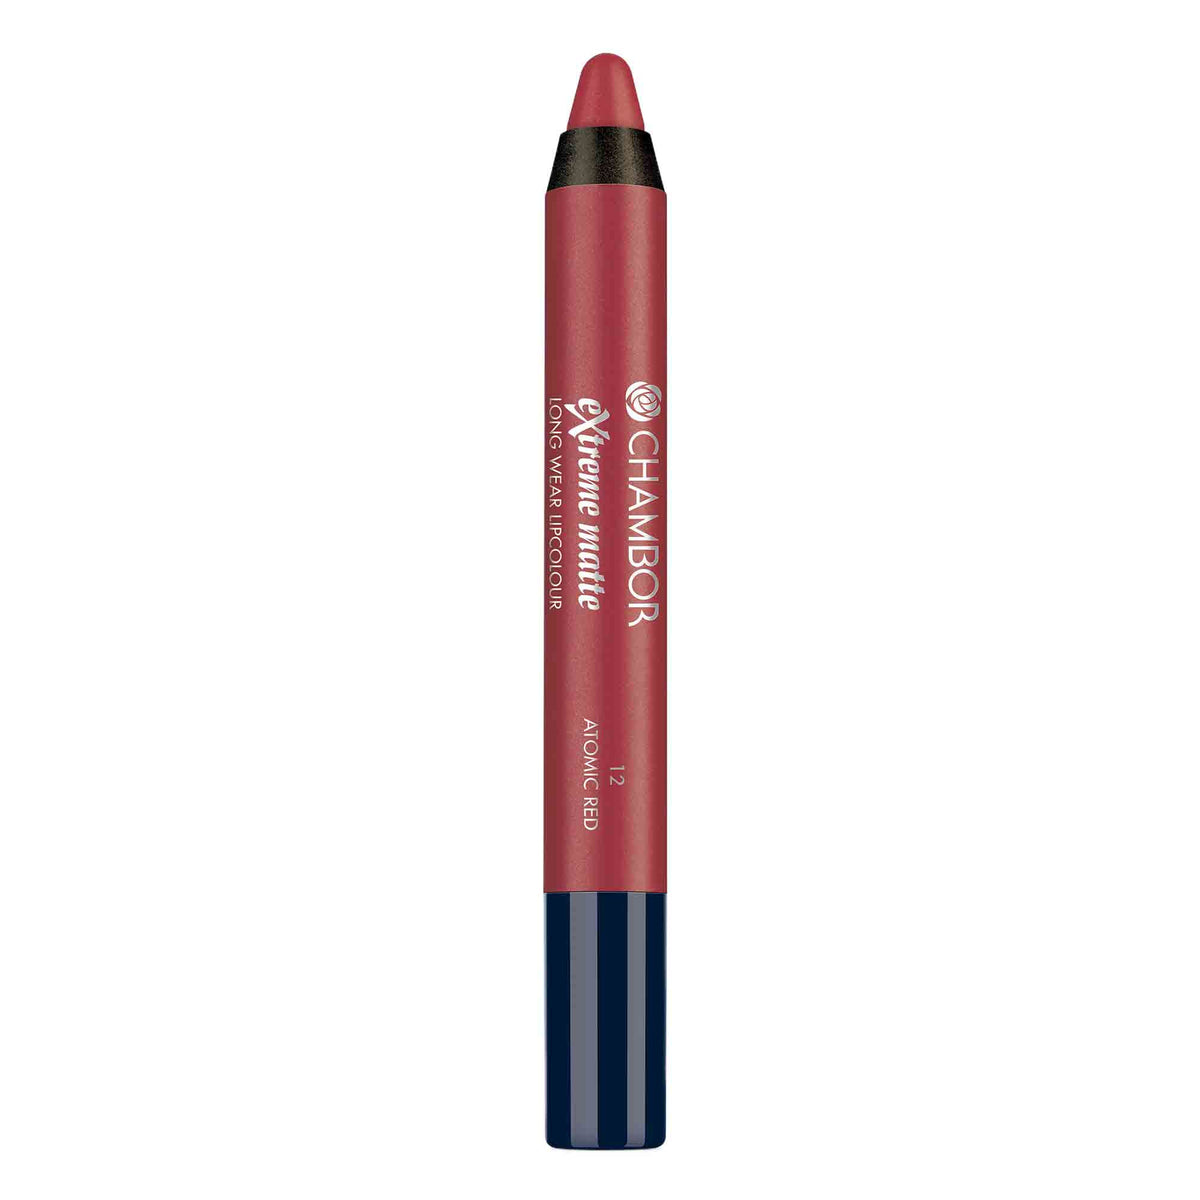 Chambor Extreme Matte Long Wear Lip Colour, Atomic Red No.12